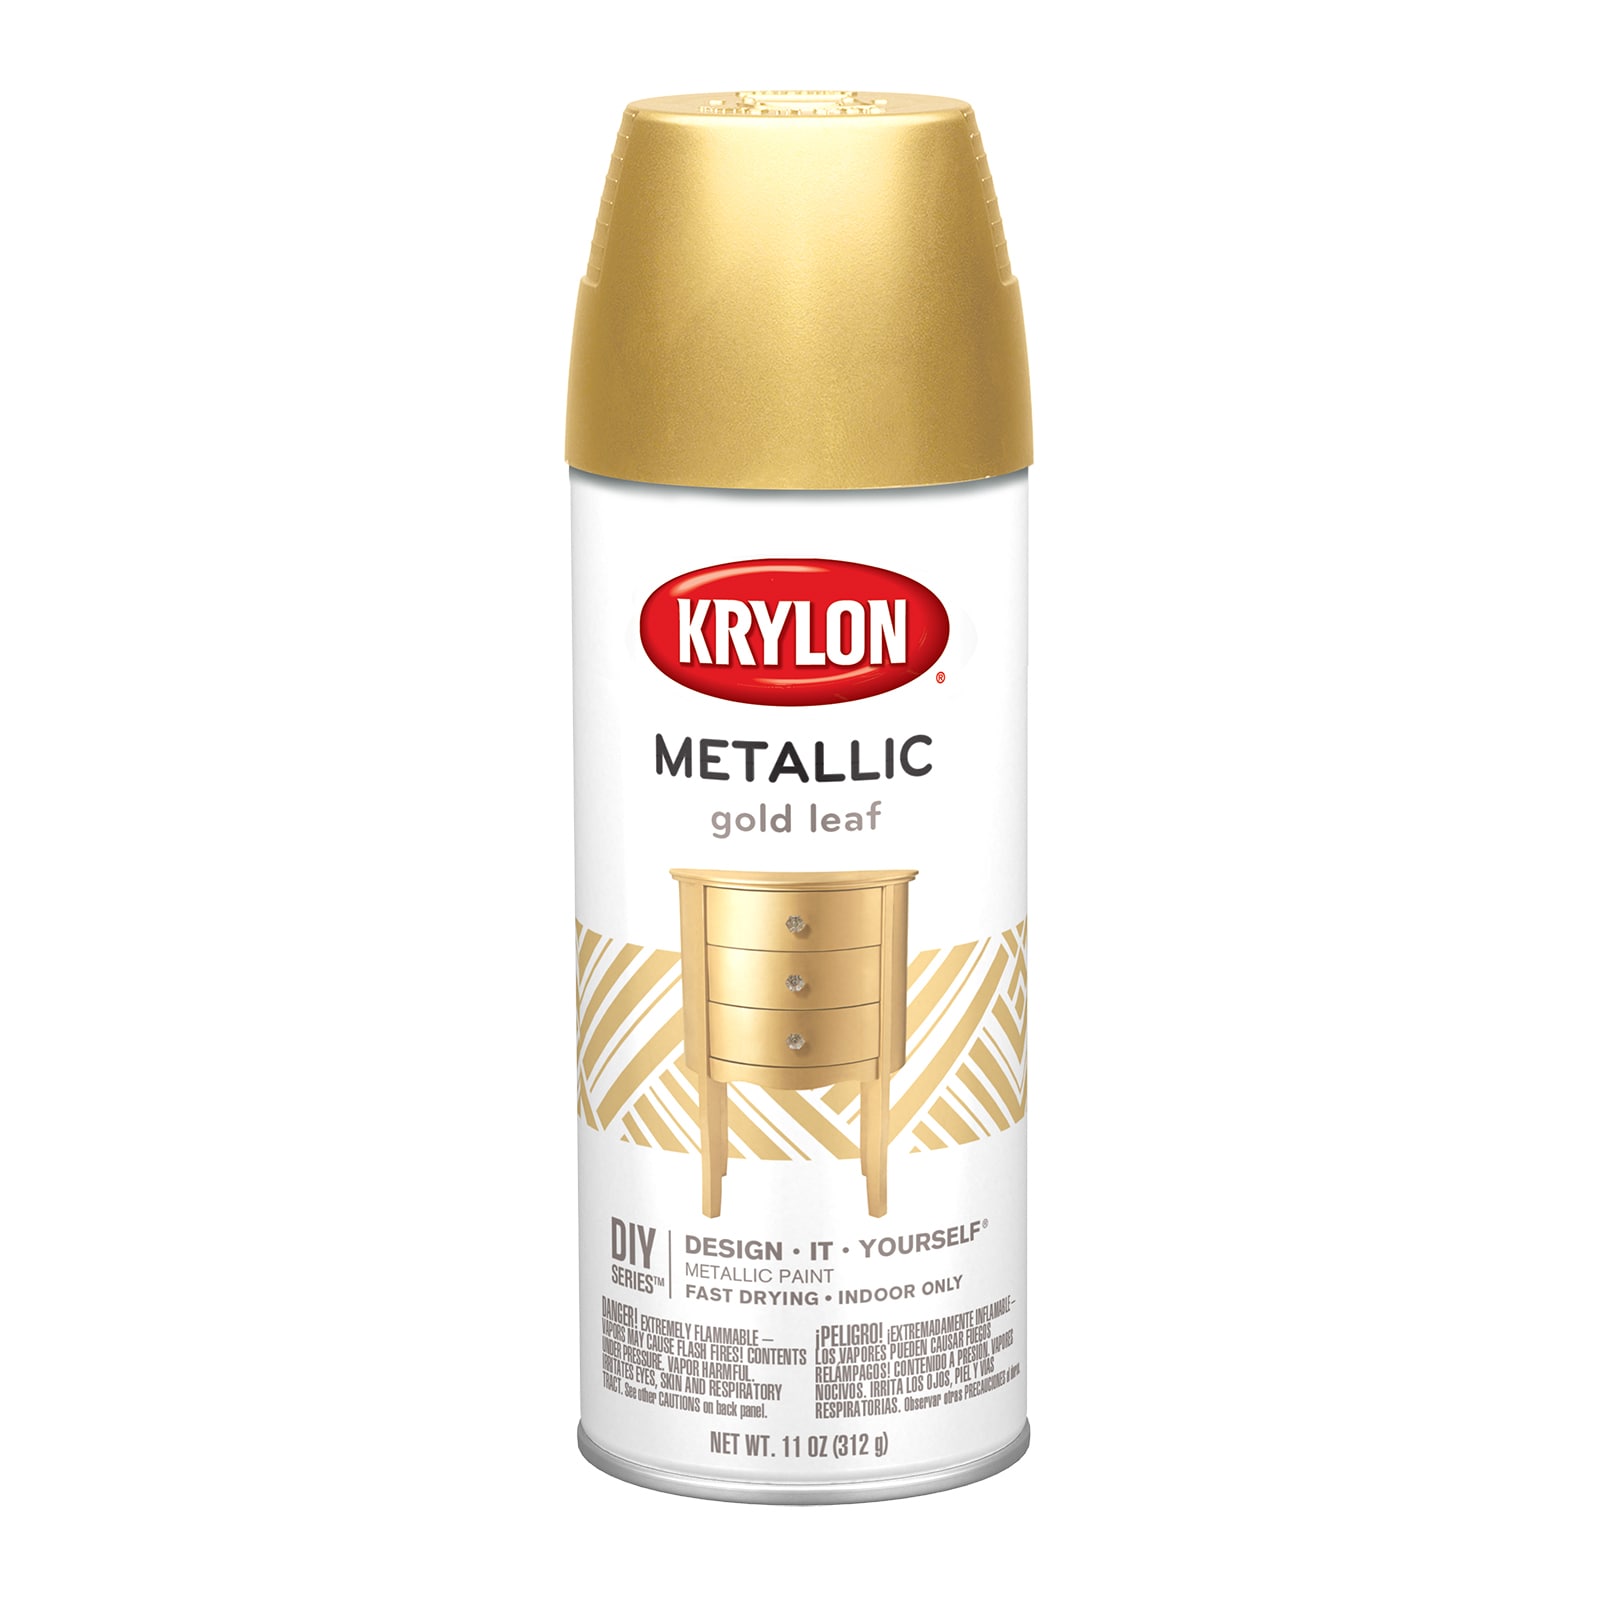 Krylon High-Gloss Metallic Gold Leaf Metallic Spray Paint (NET WT. 11-oz)